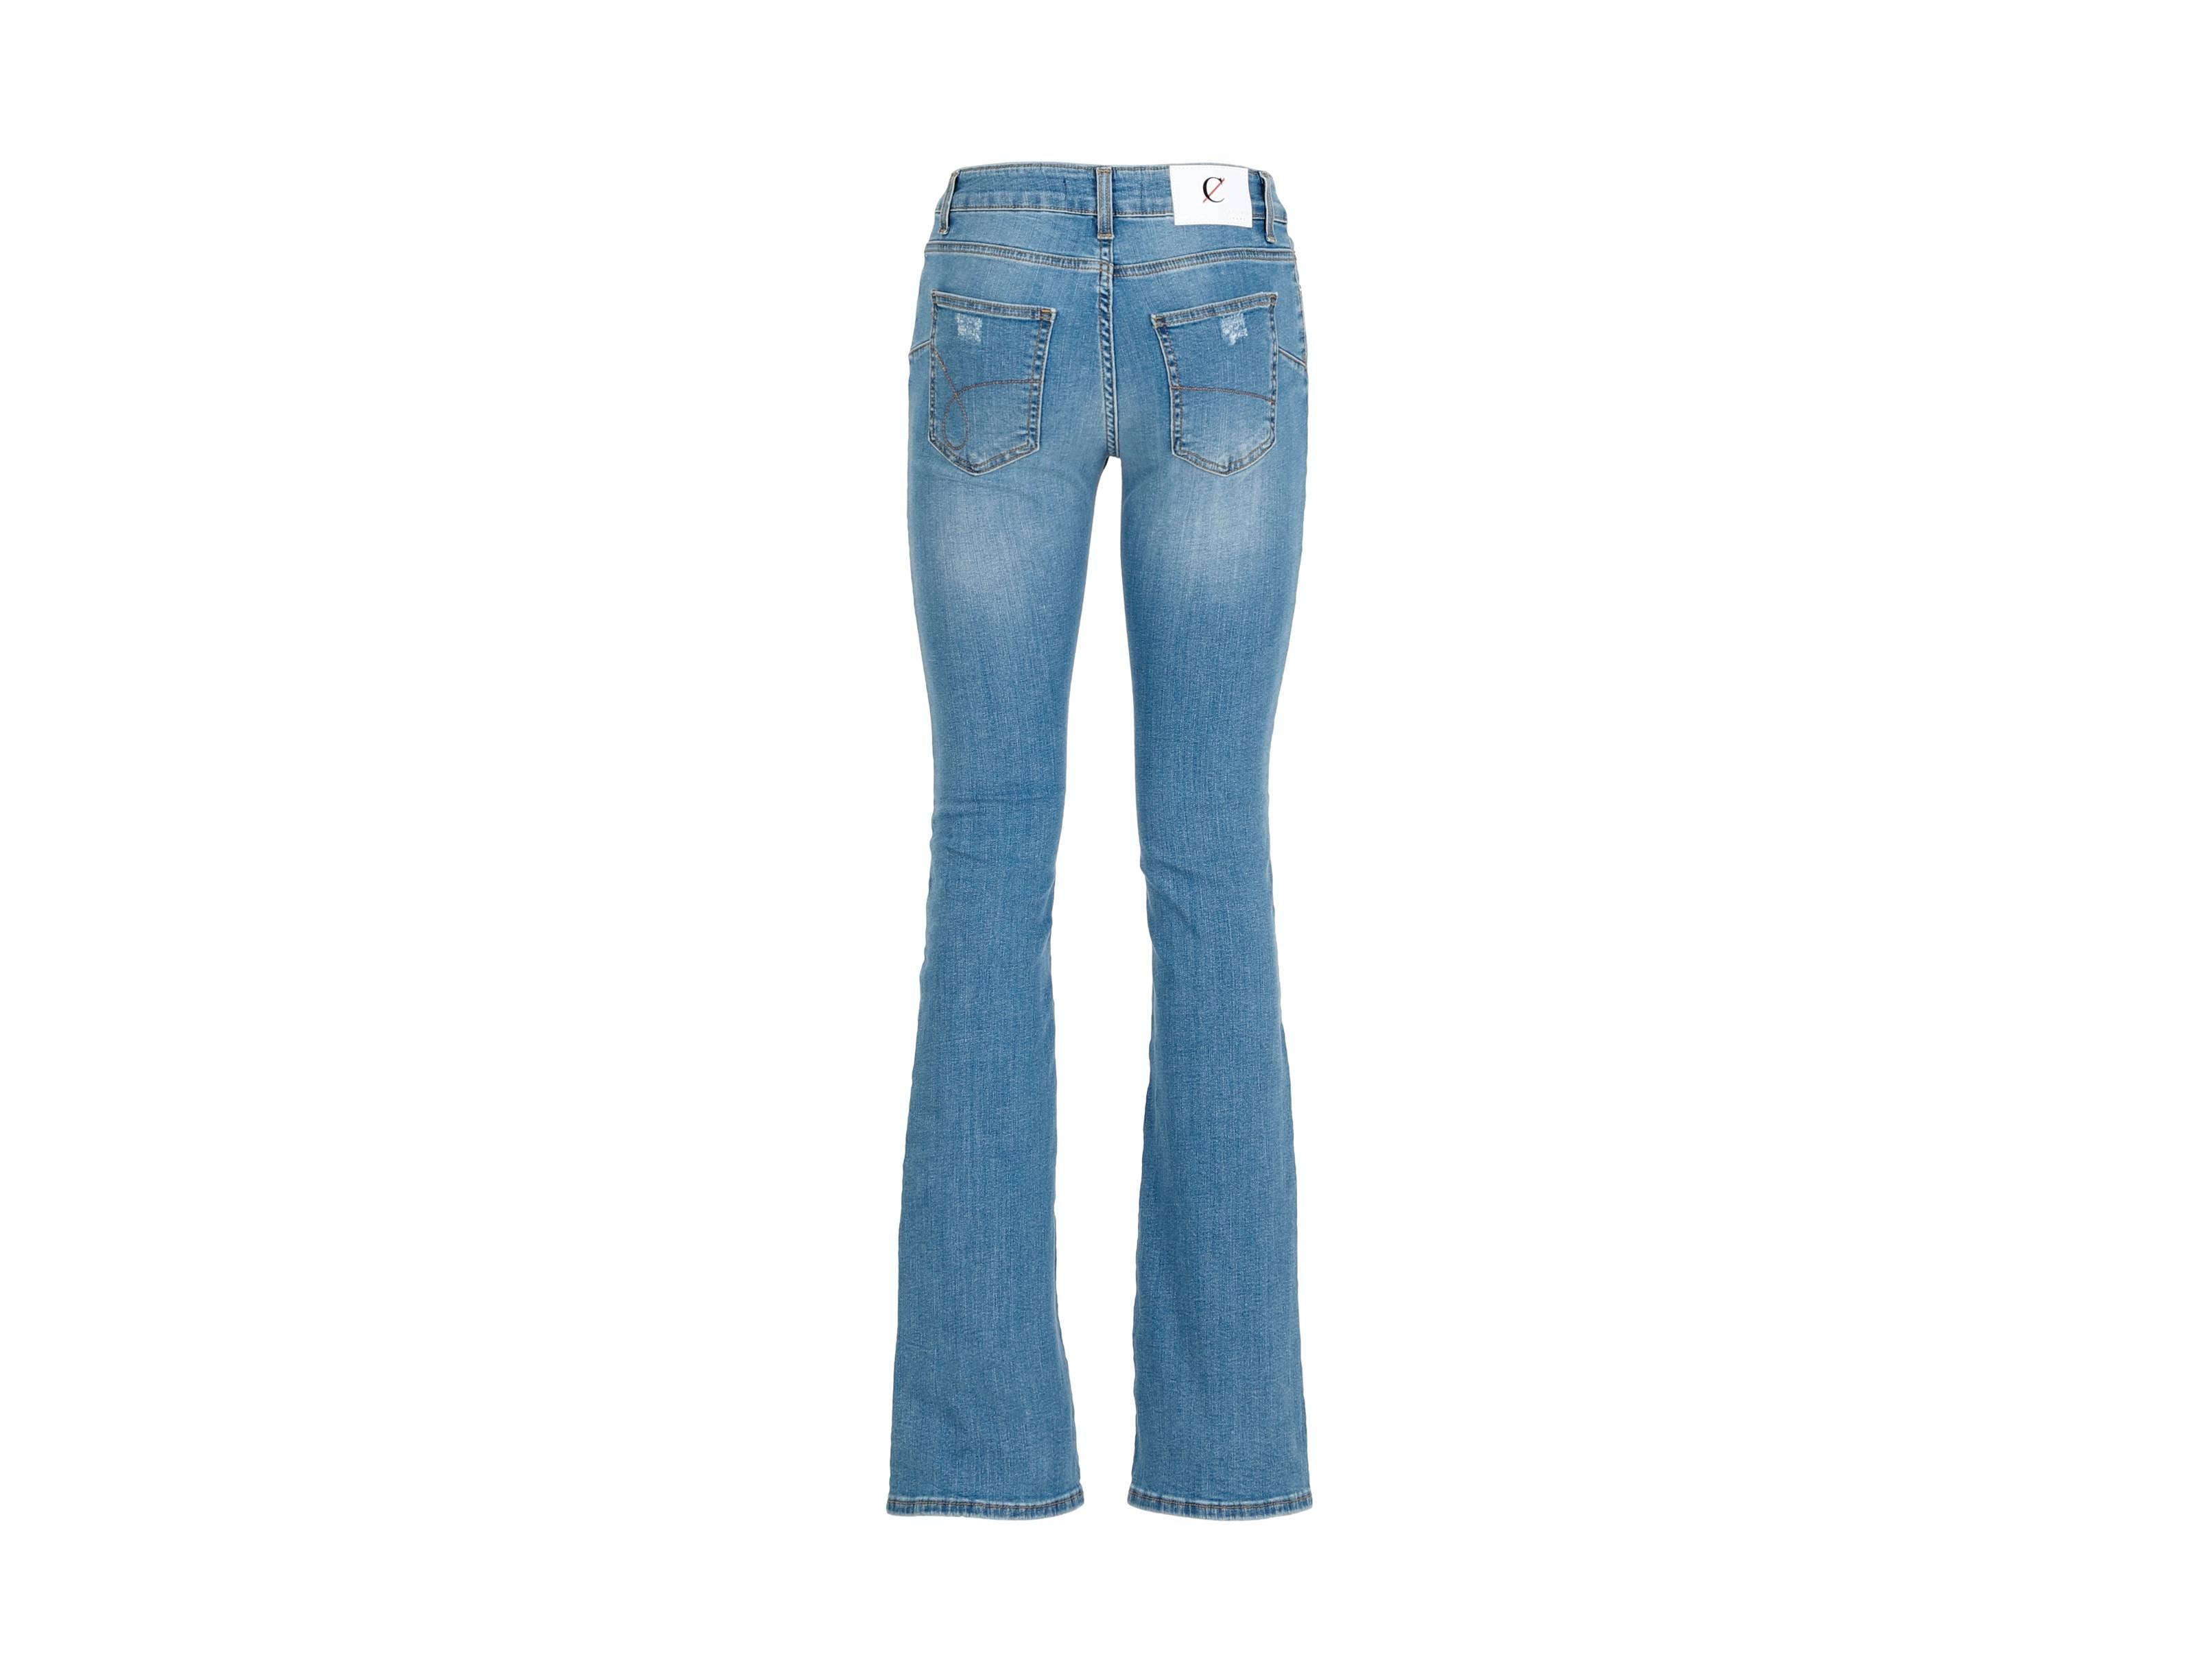 CAFENOIR Jeans Zampa Super Stretch Light Sky Blu JJ0055 - Sandrini Calzature e Abbigliamento